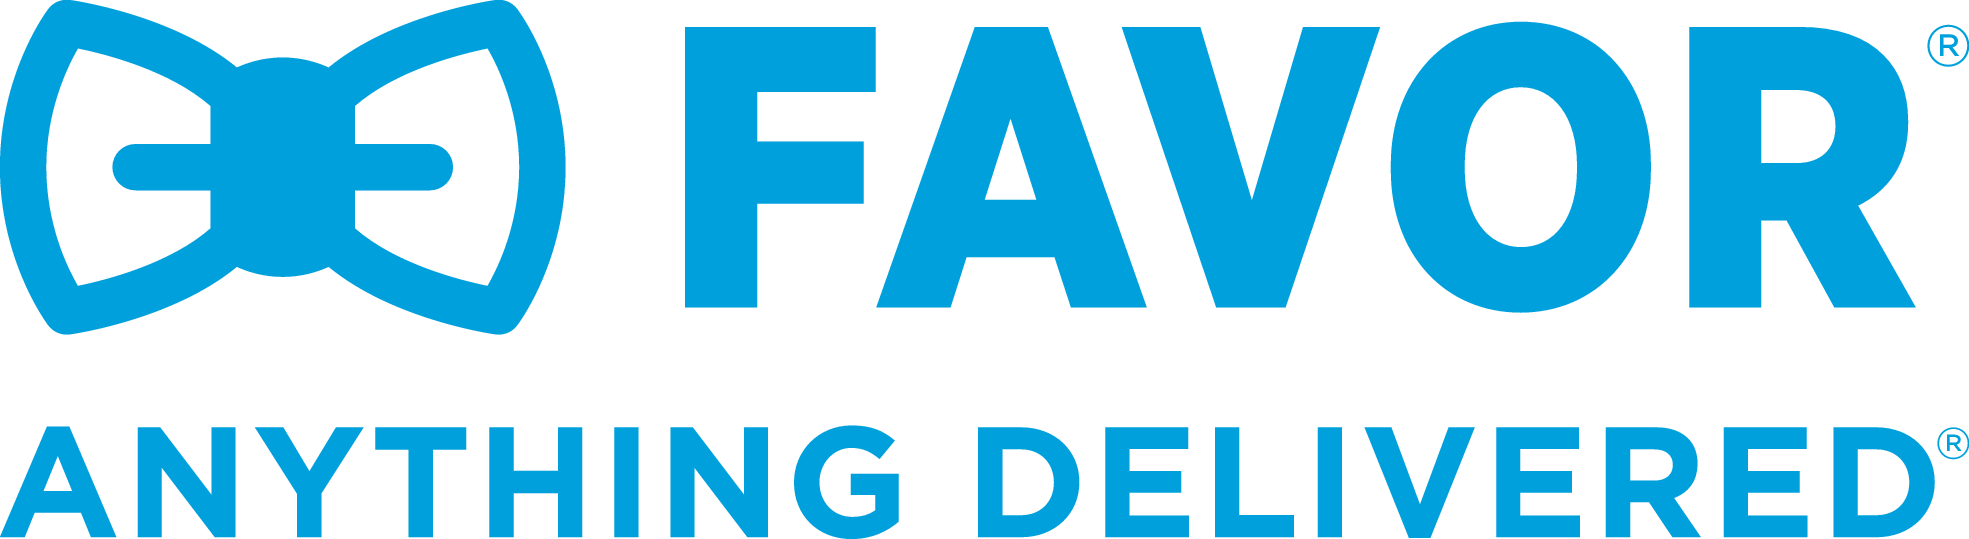 Favor logo